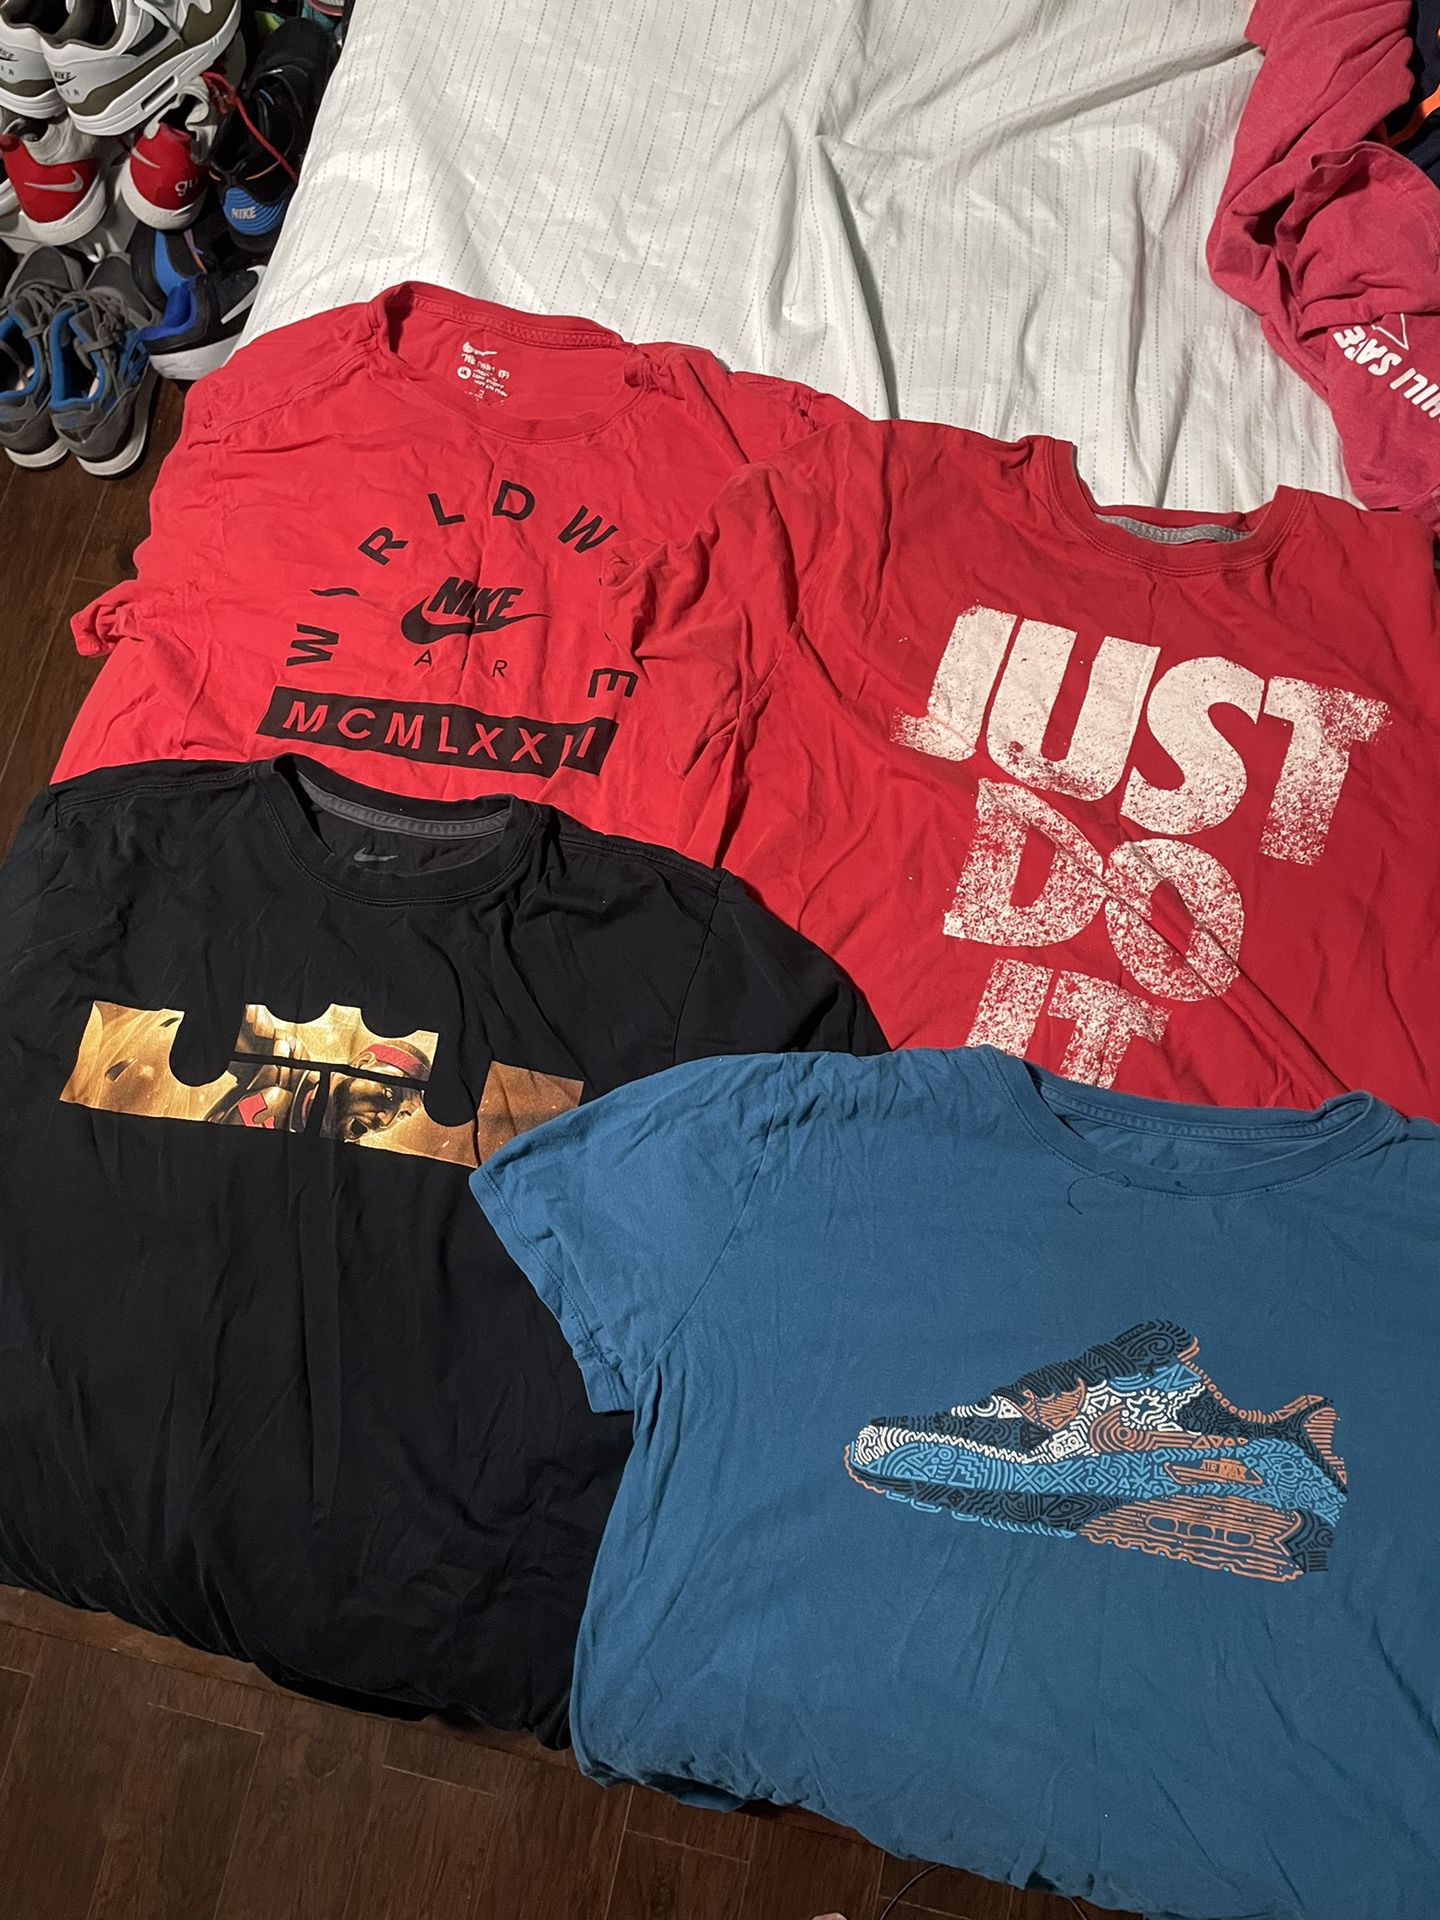 Nike T Shirts 4 For $20 Bundle